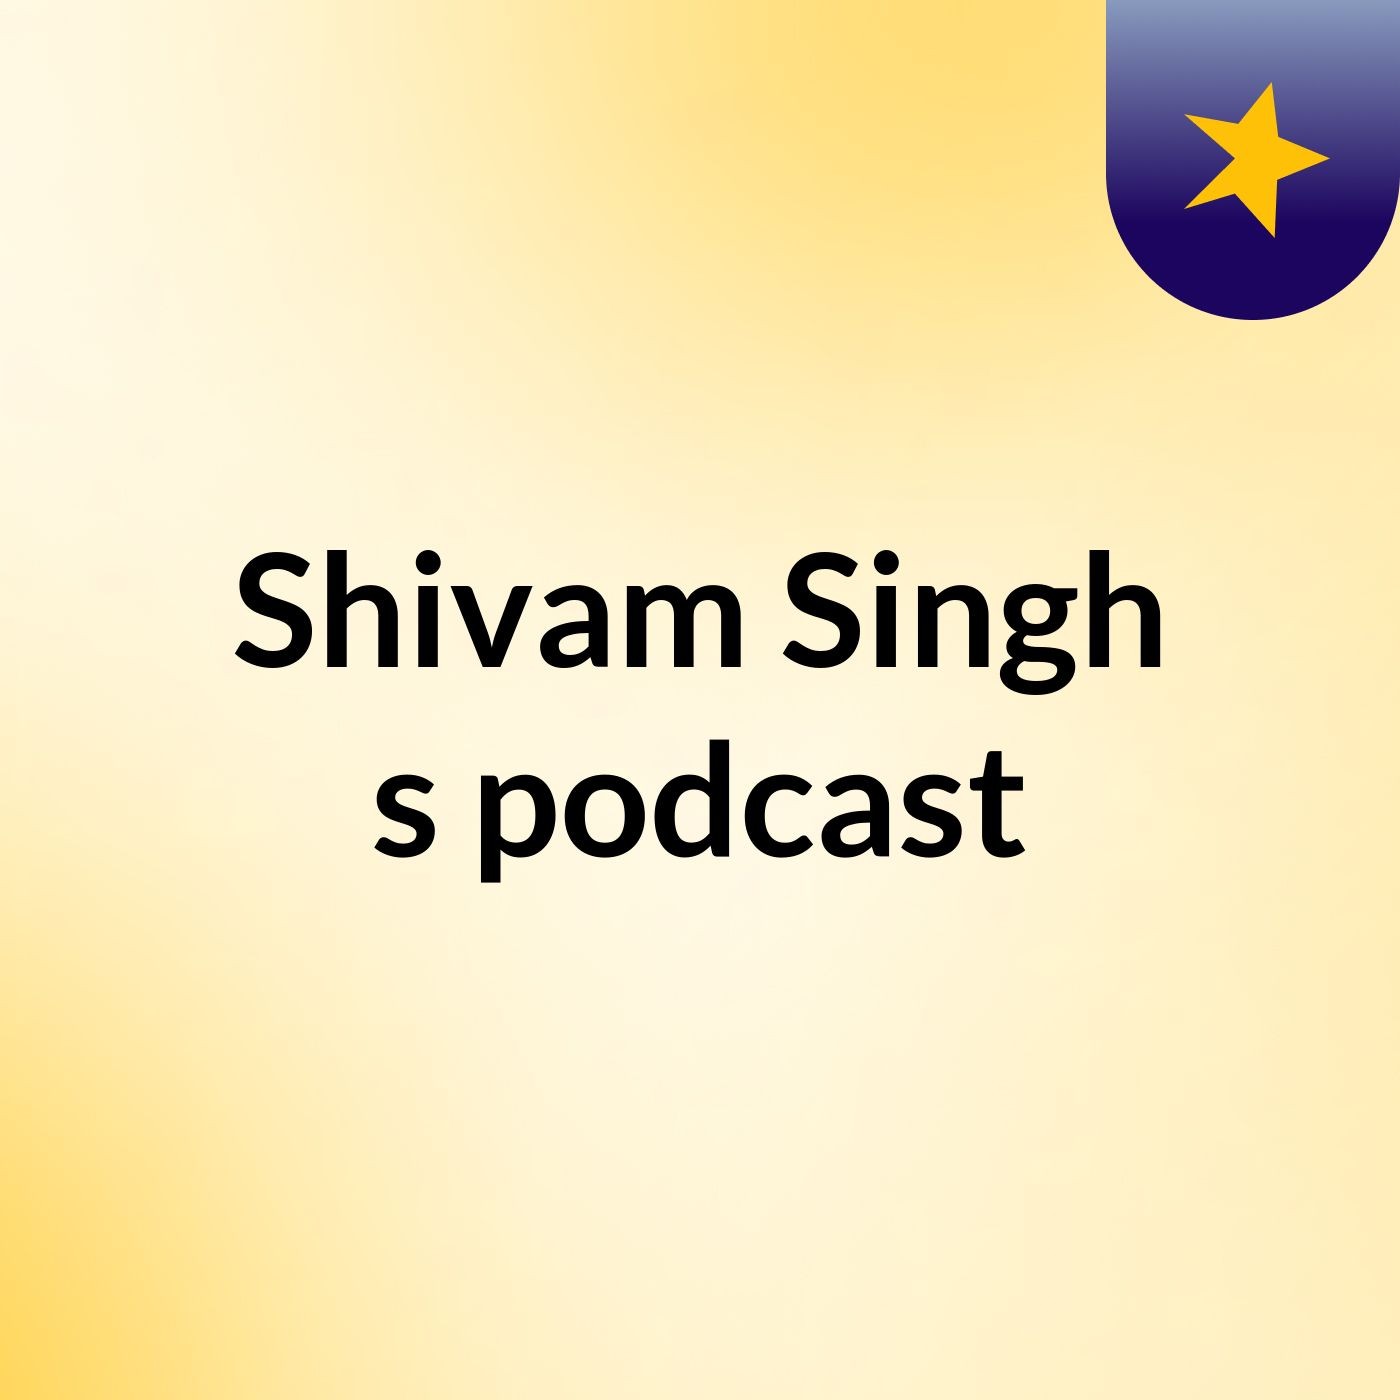 Shivam Singh's podcast